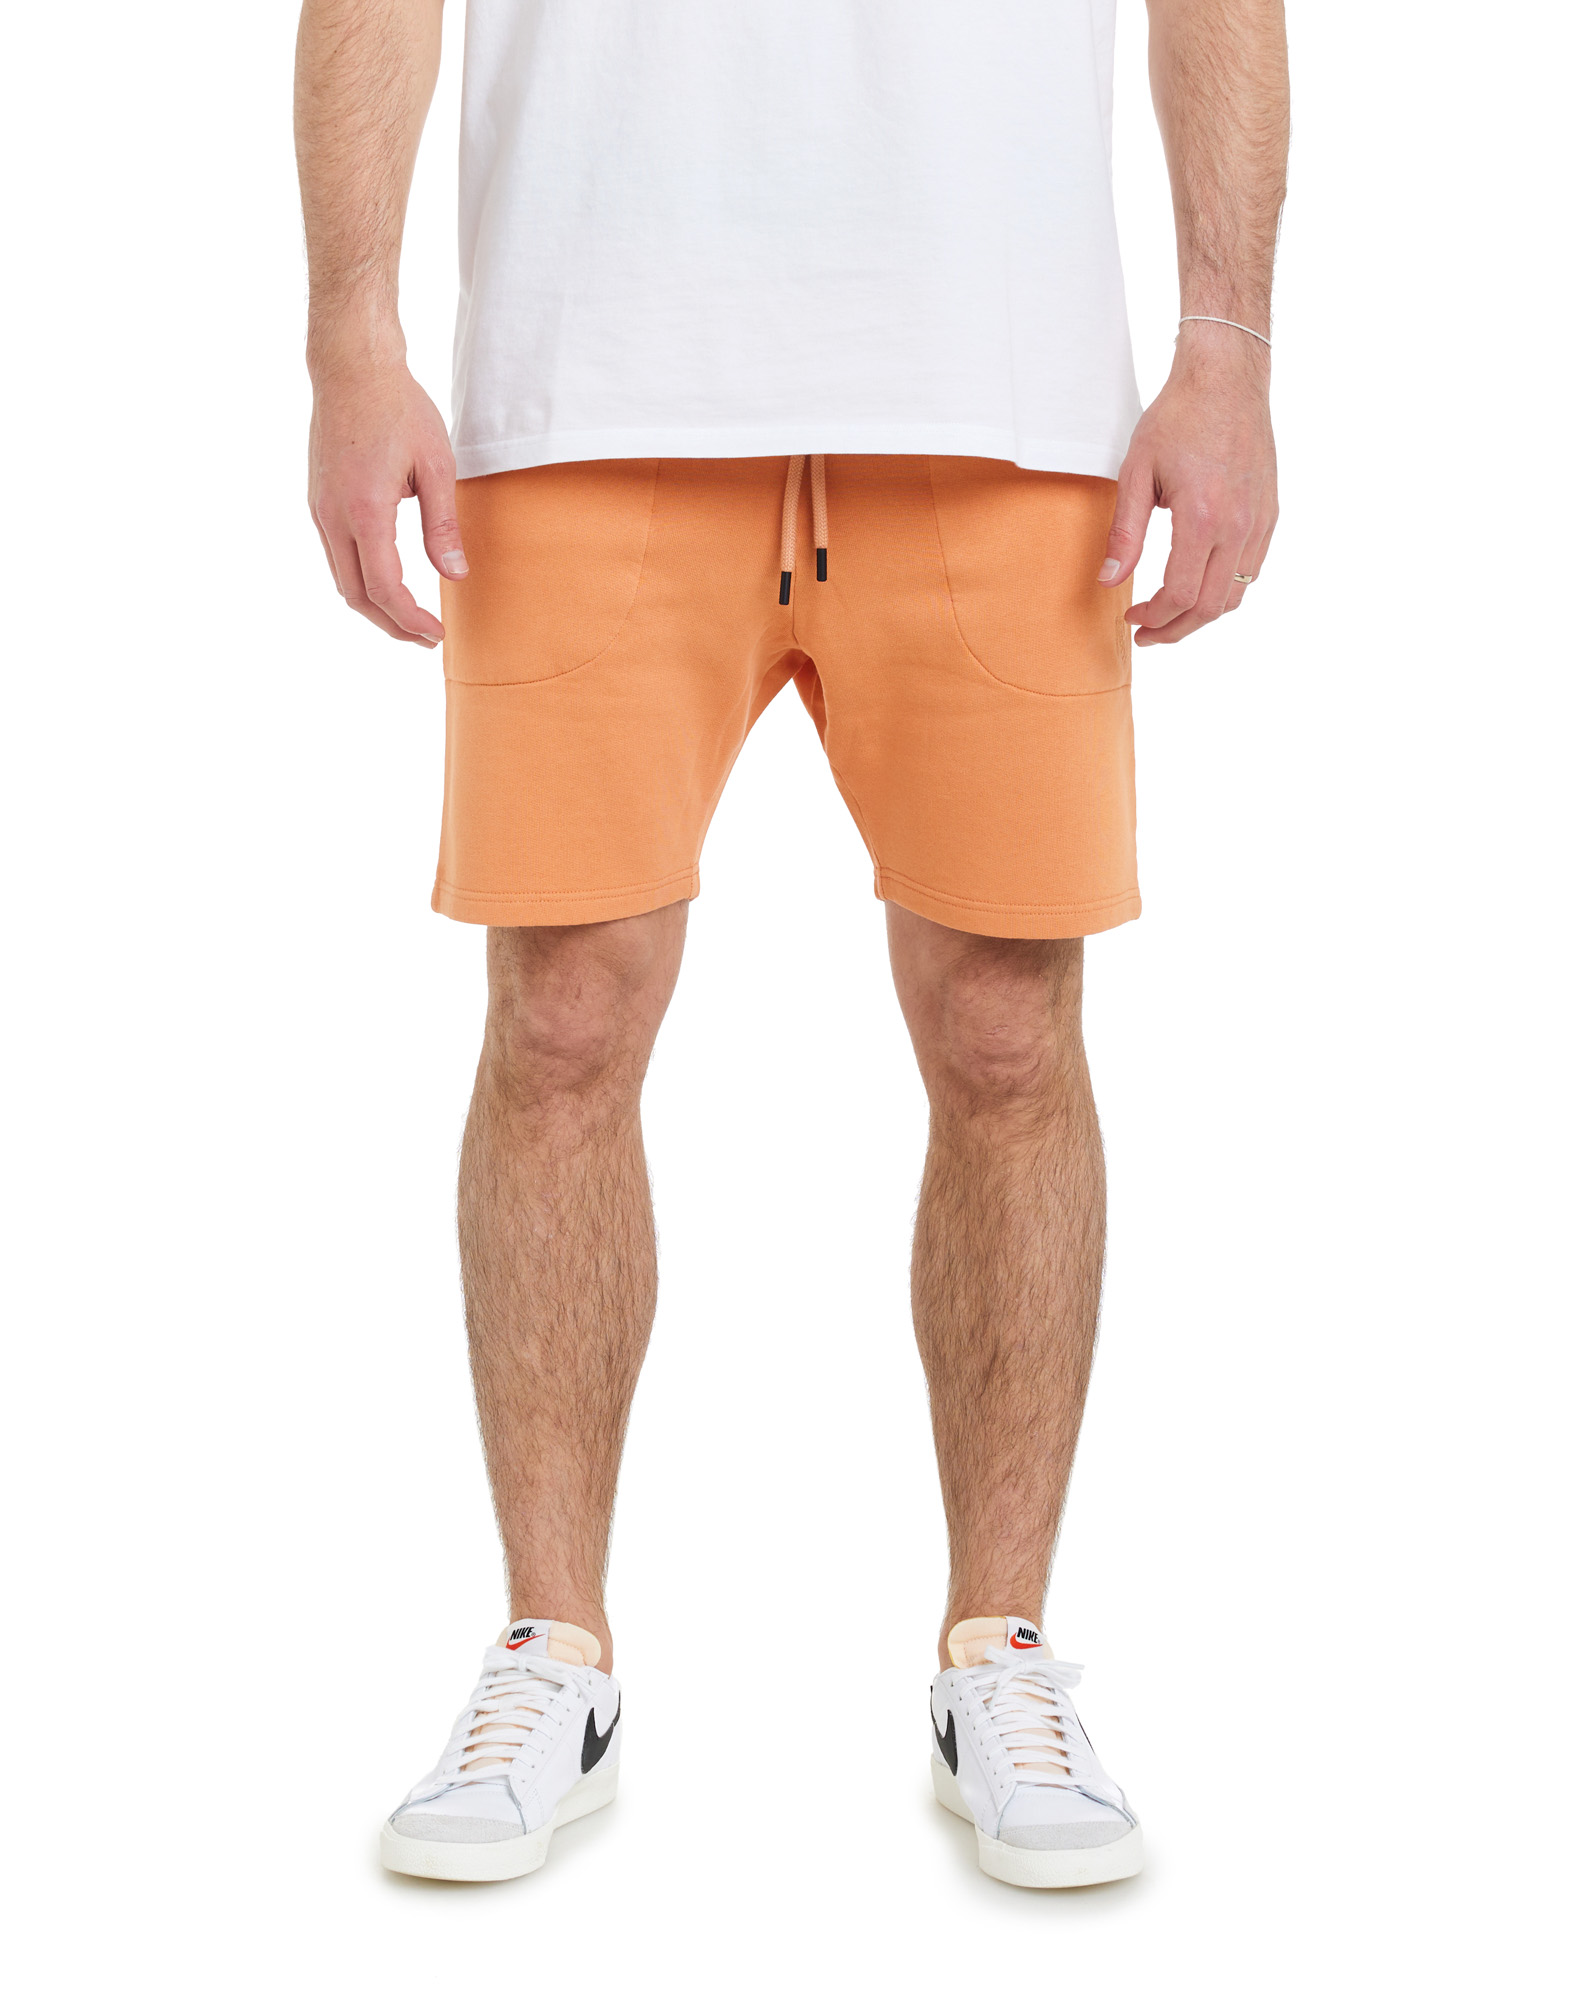 Nike Orange Pull-on Shorts for Women